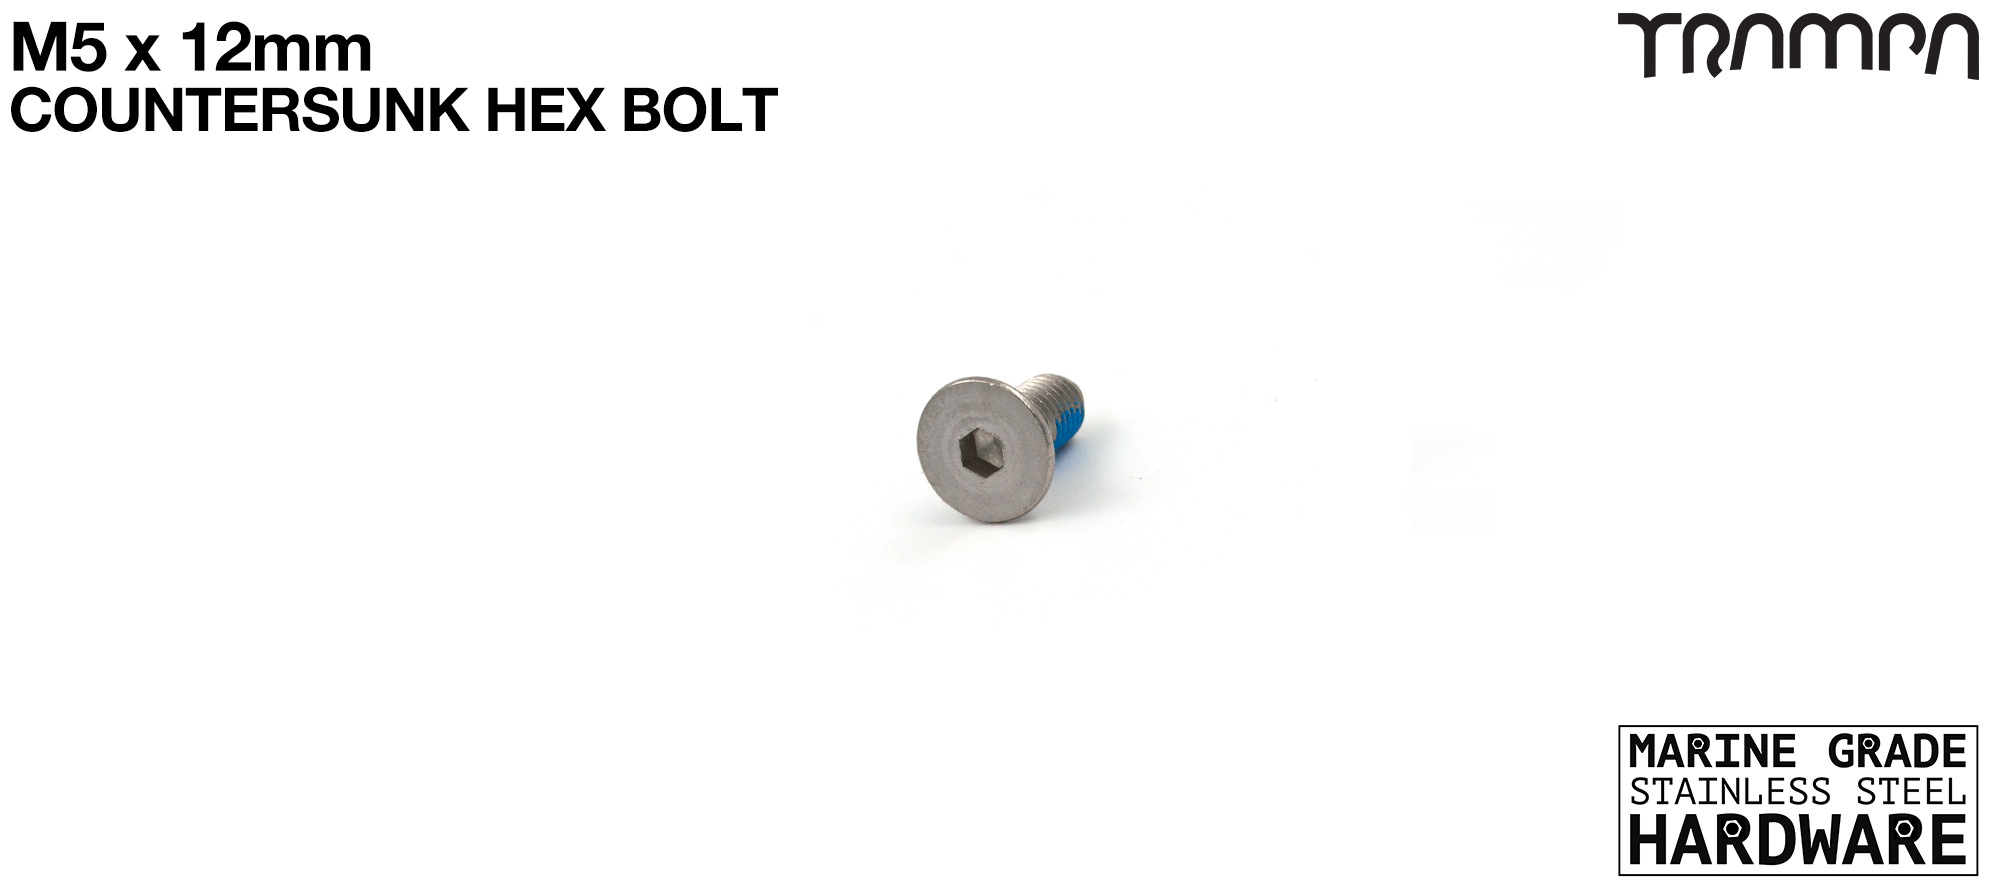 M5 x 12mm Countersunk Allen-Key Bolt - Marine Grade Stainless steel with locking paste